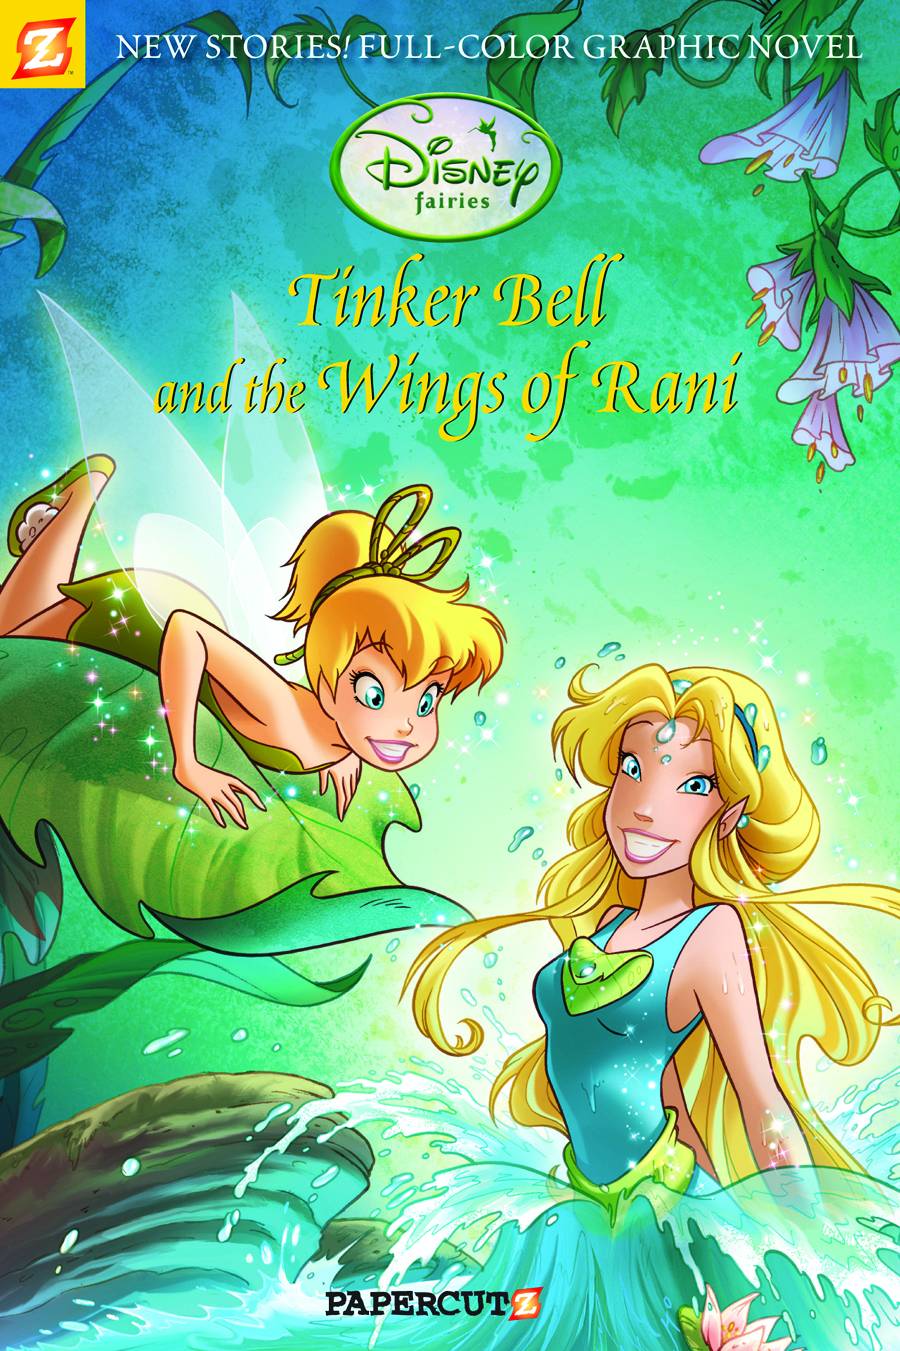 Disney Fairies Graphic Novel Volume 2 Tink & Wings of Rani